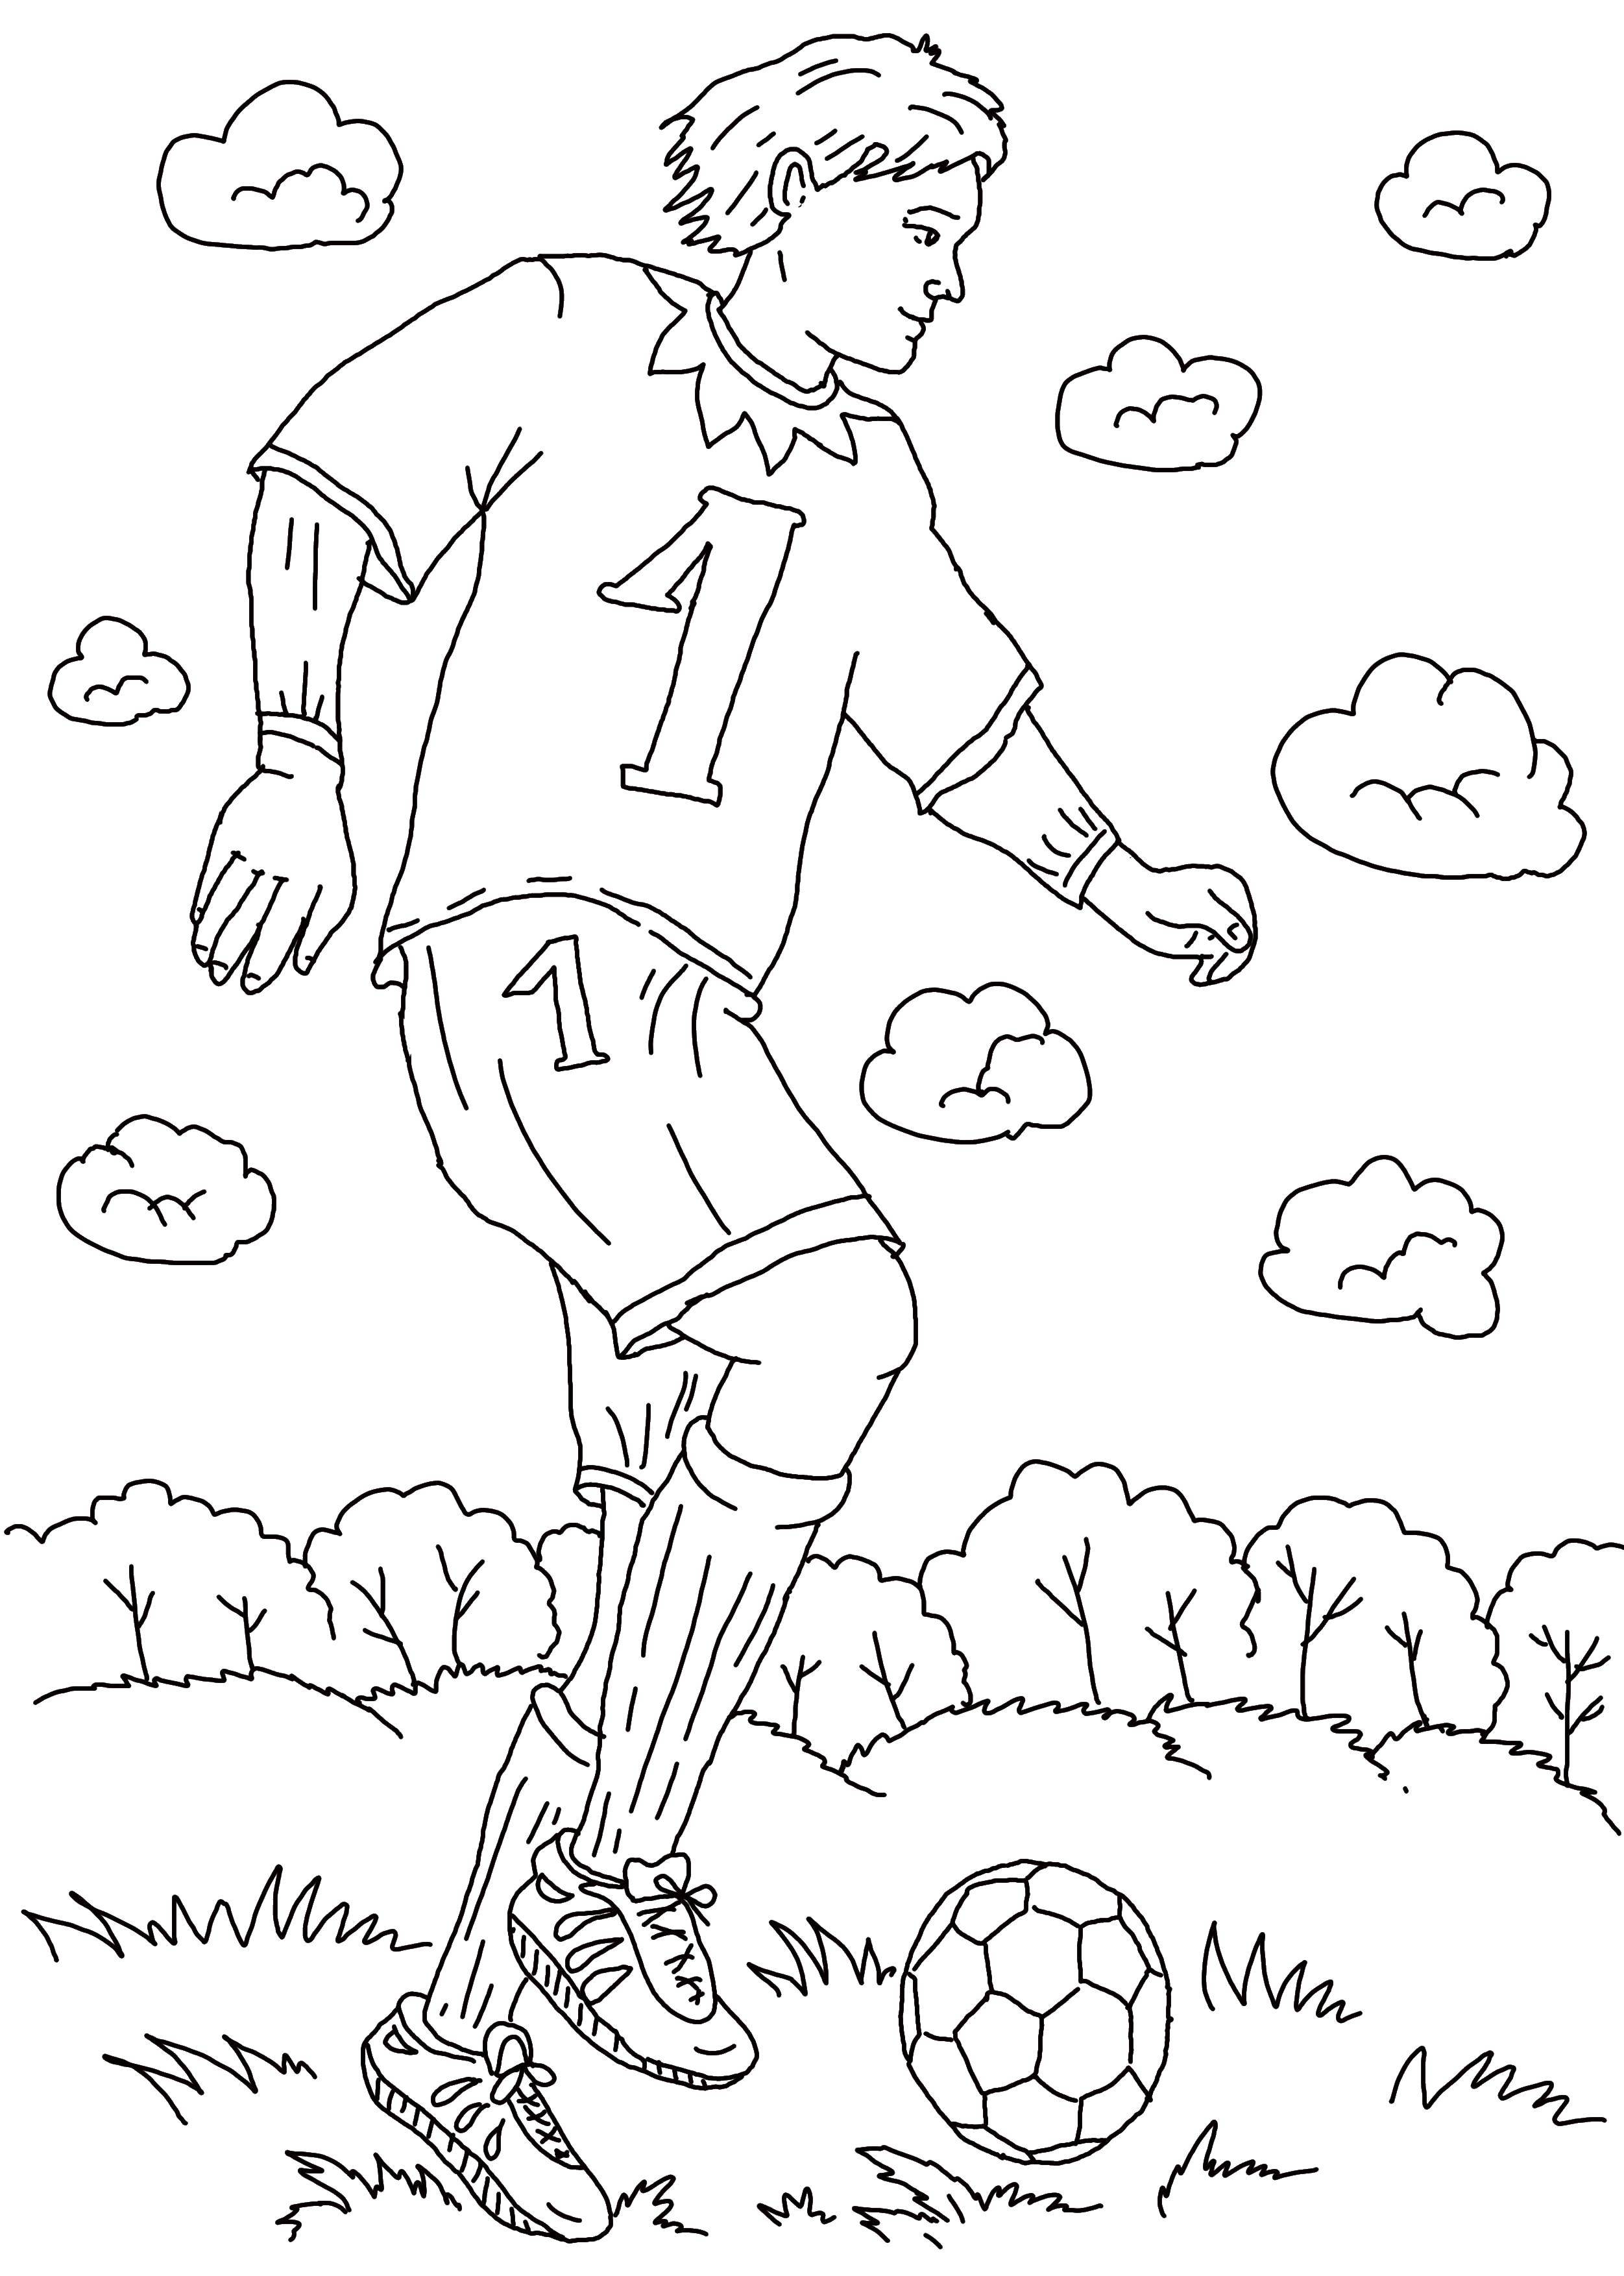 Название: Раскраска Мальчик играет в футбол. Категория: спорт. Теги: спорт, мяч.